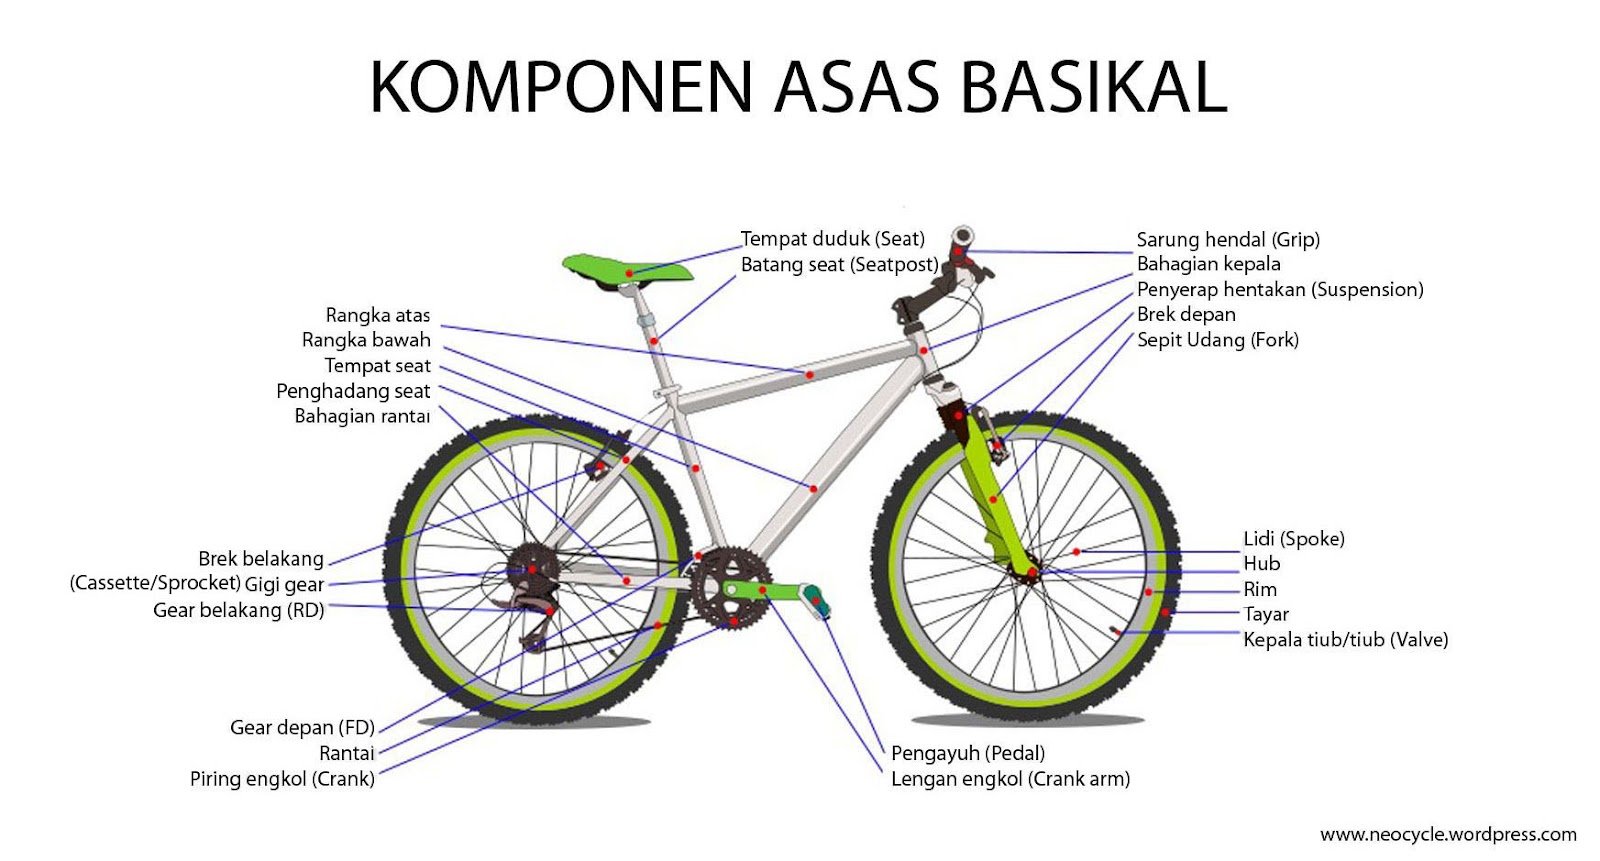 Komponen Mekanikal Basikal